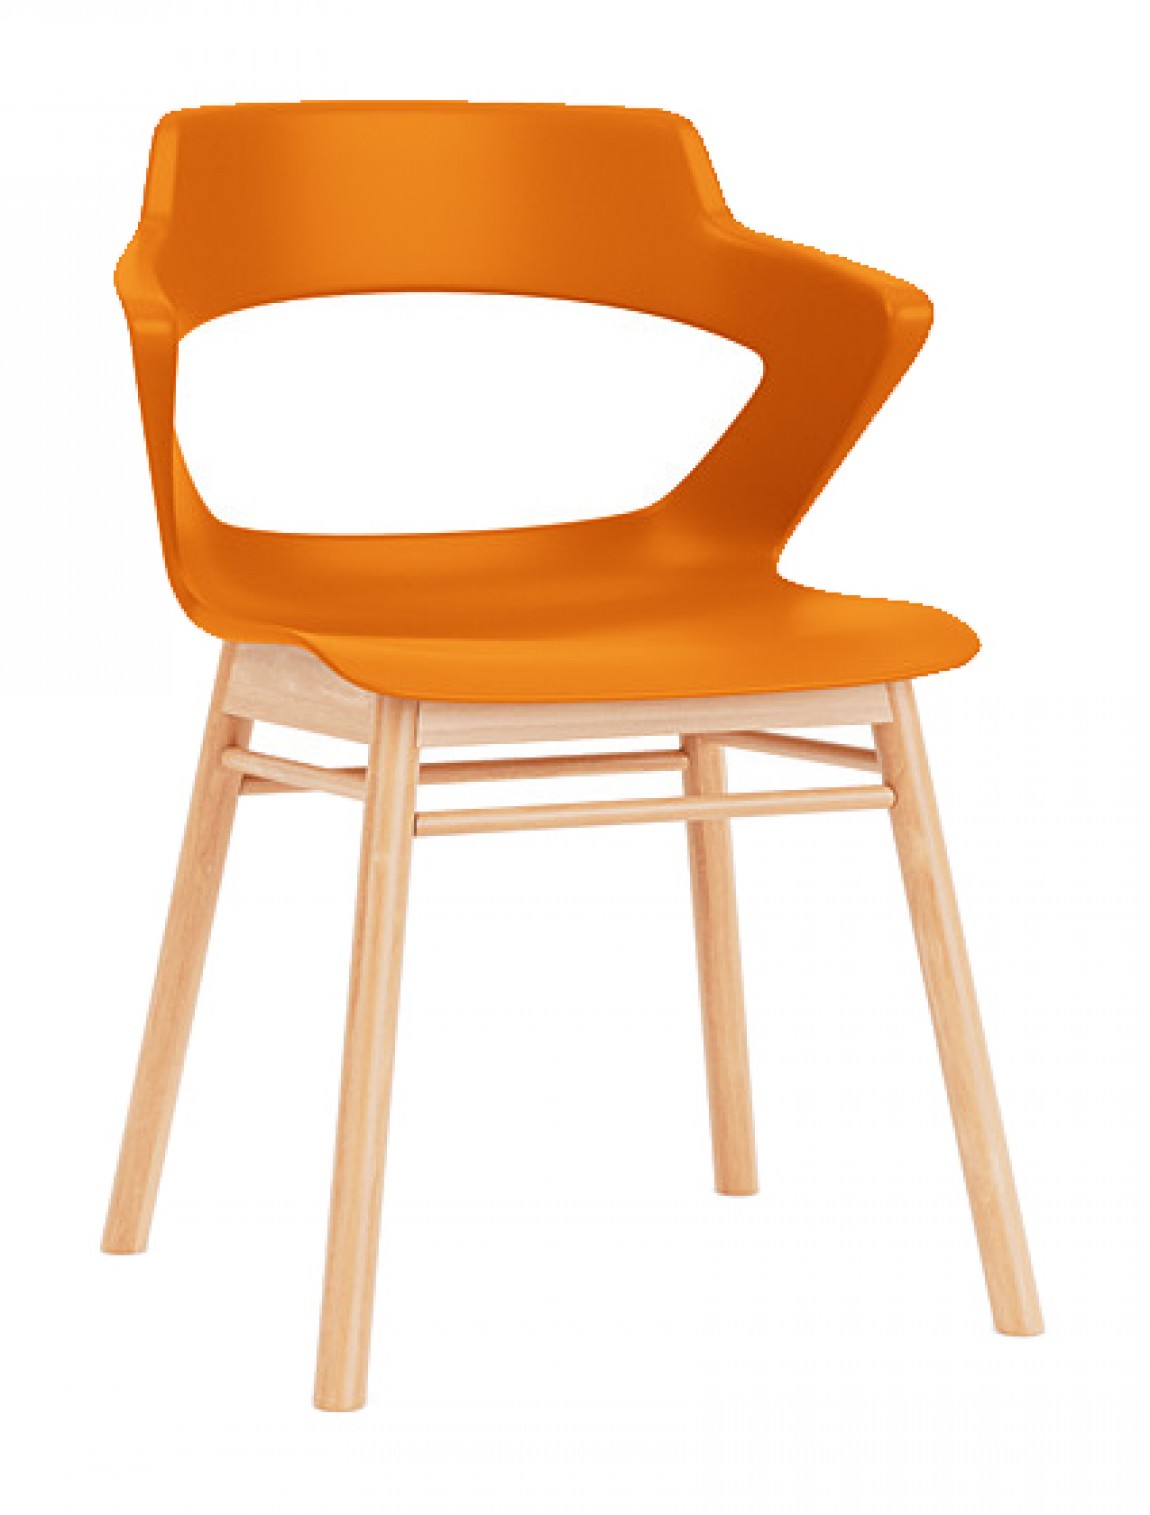 orange waiting room chair